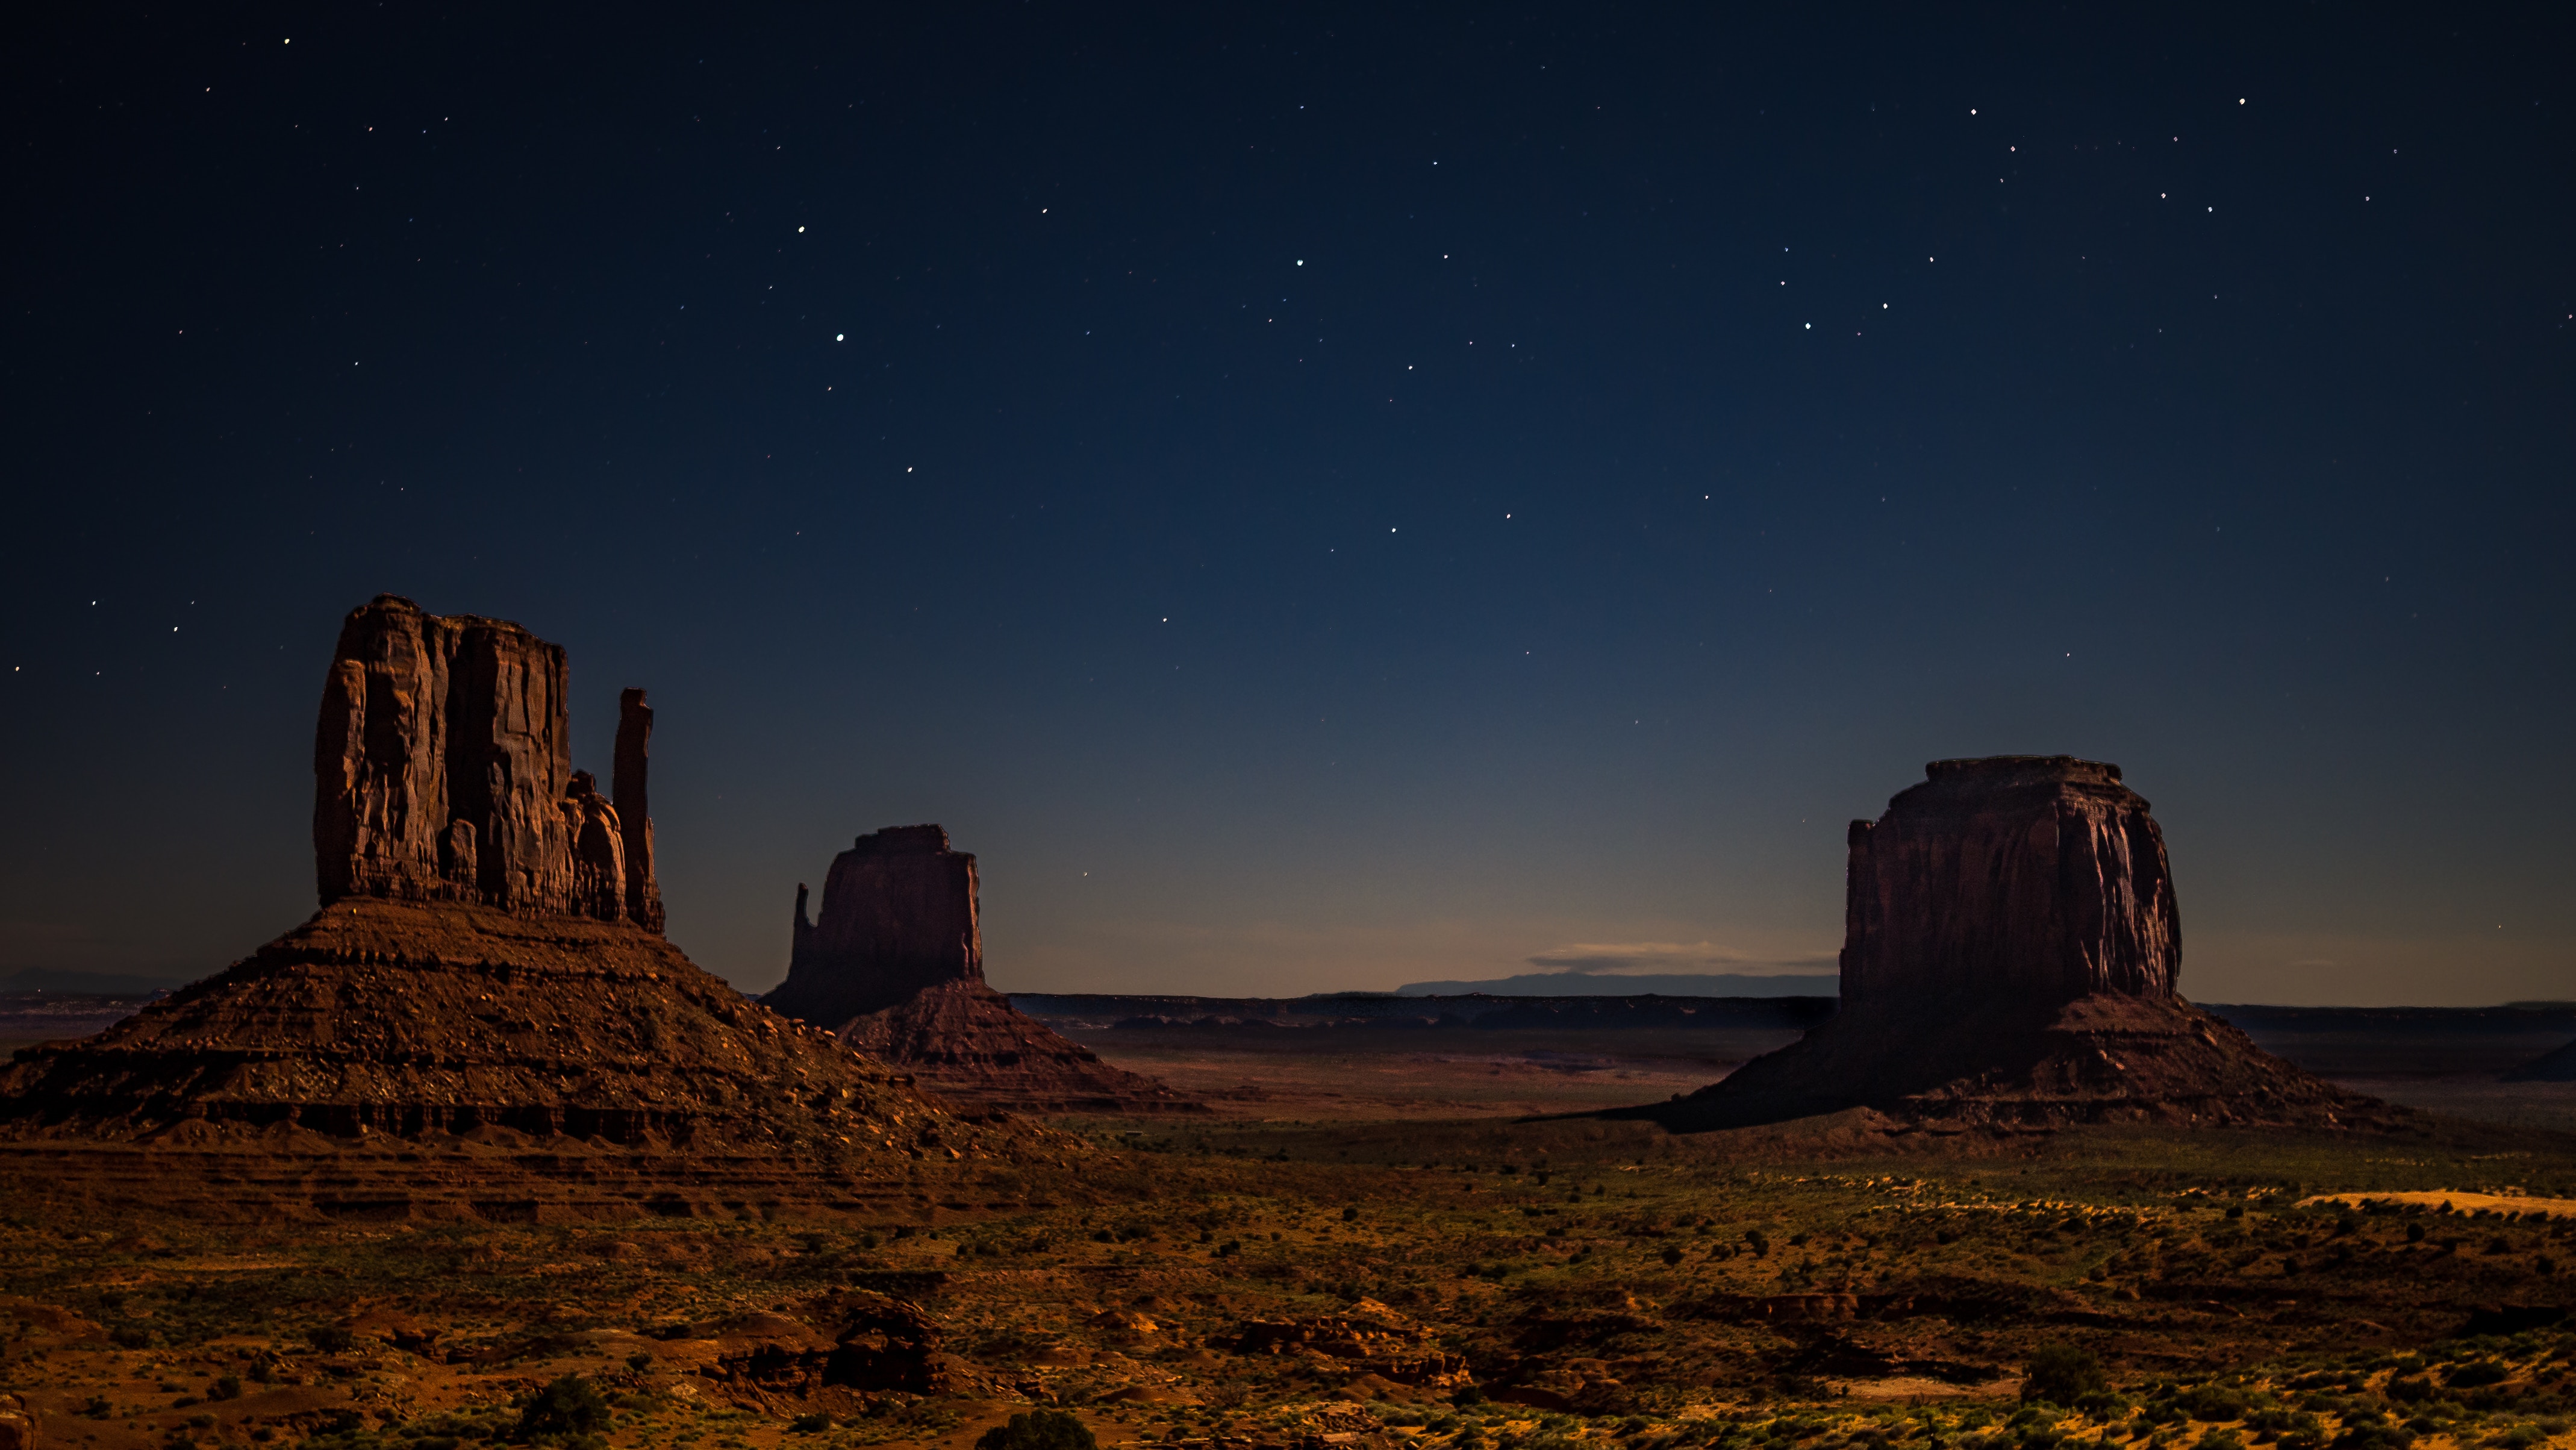 General 4277x2407 desert starry night landscape nature